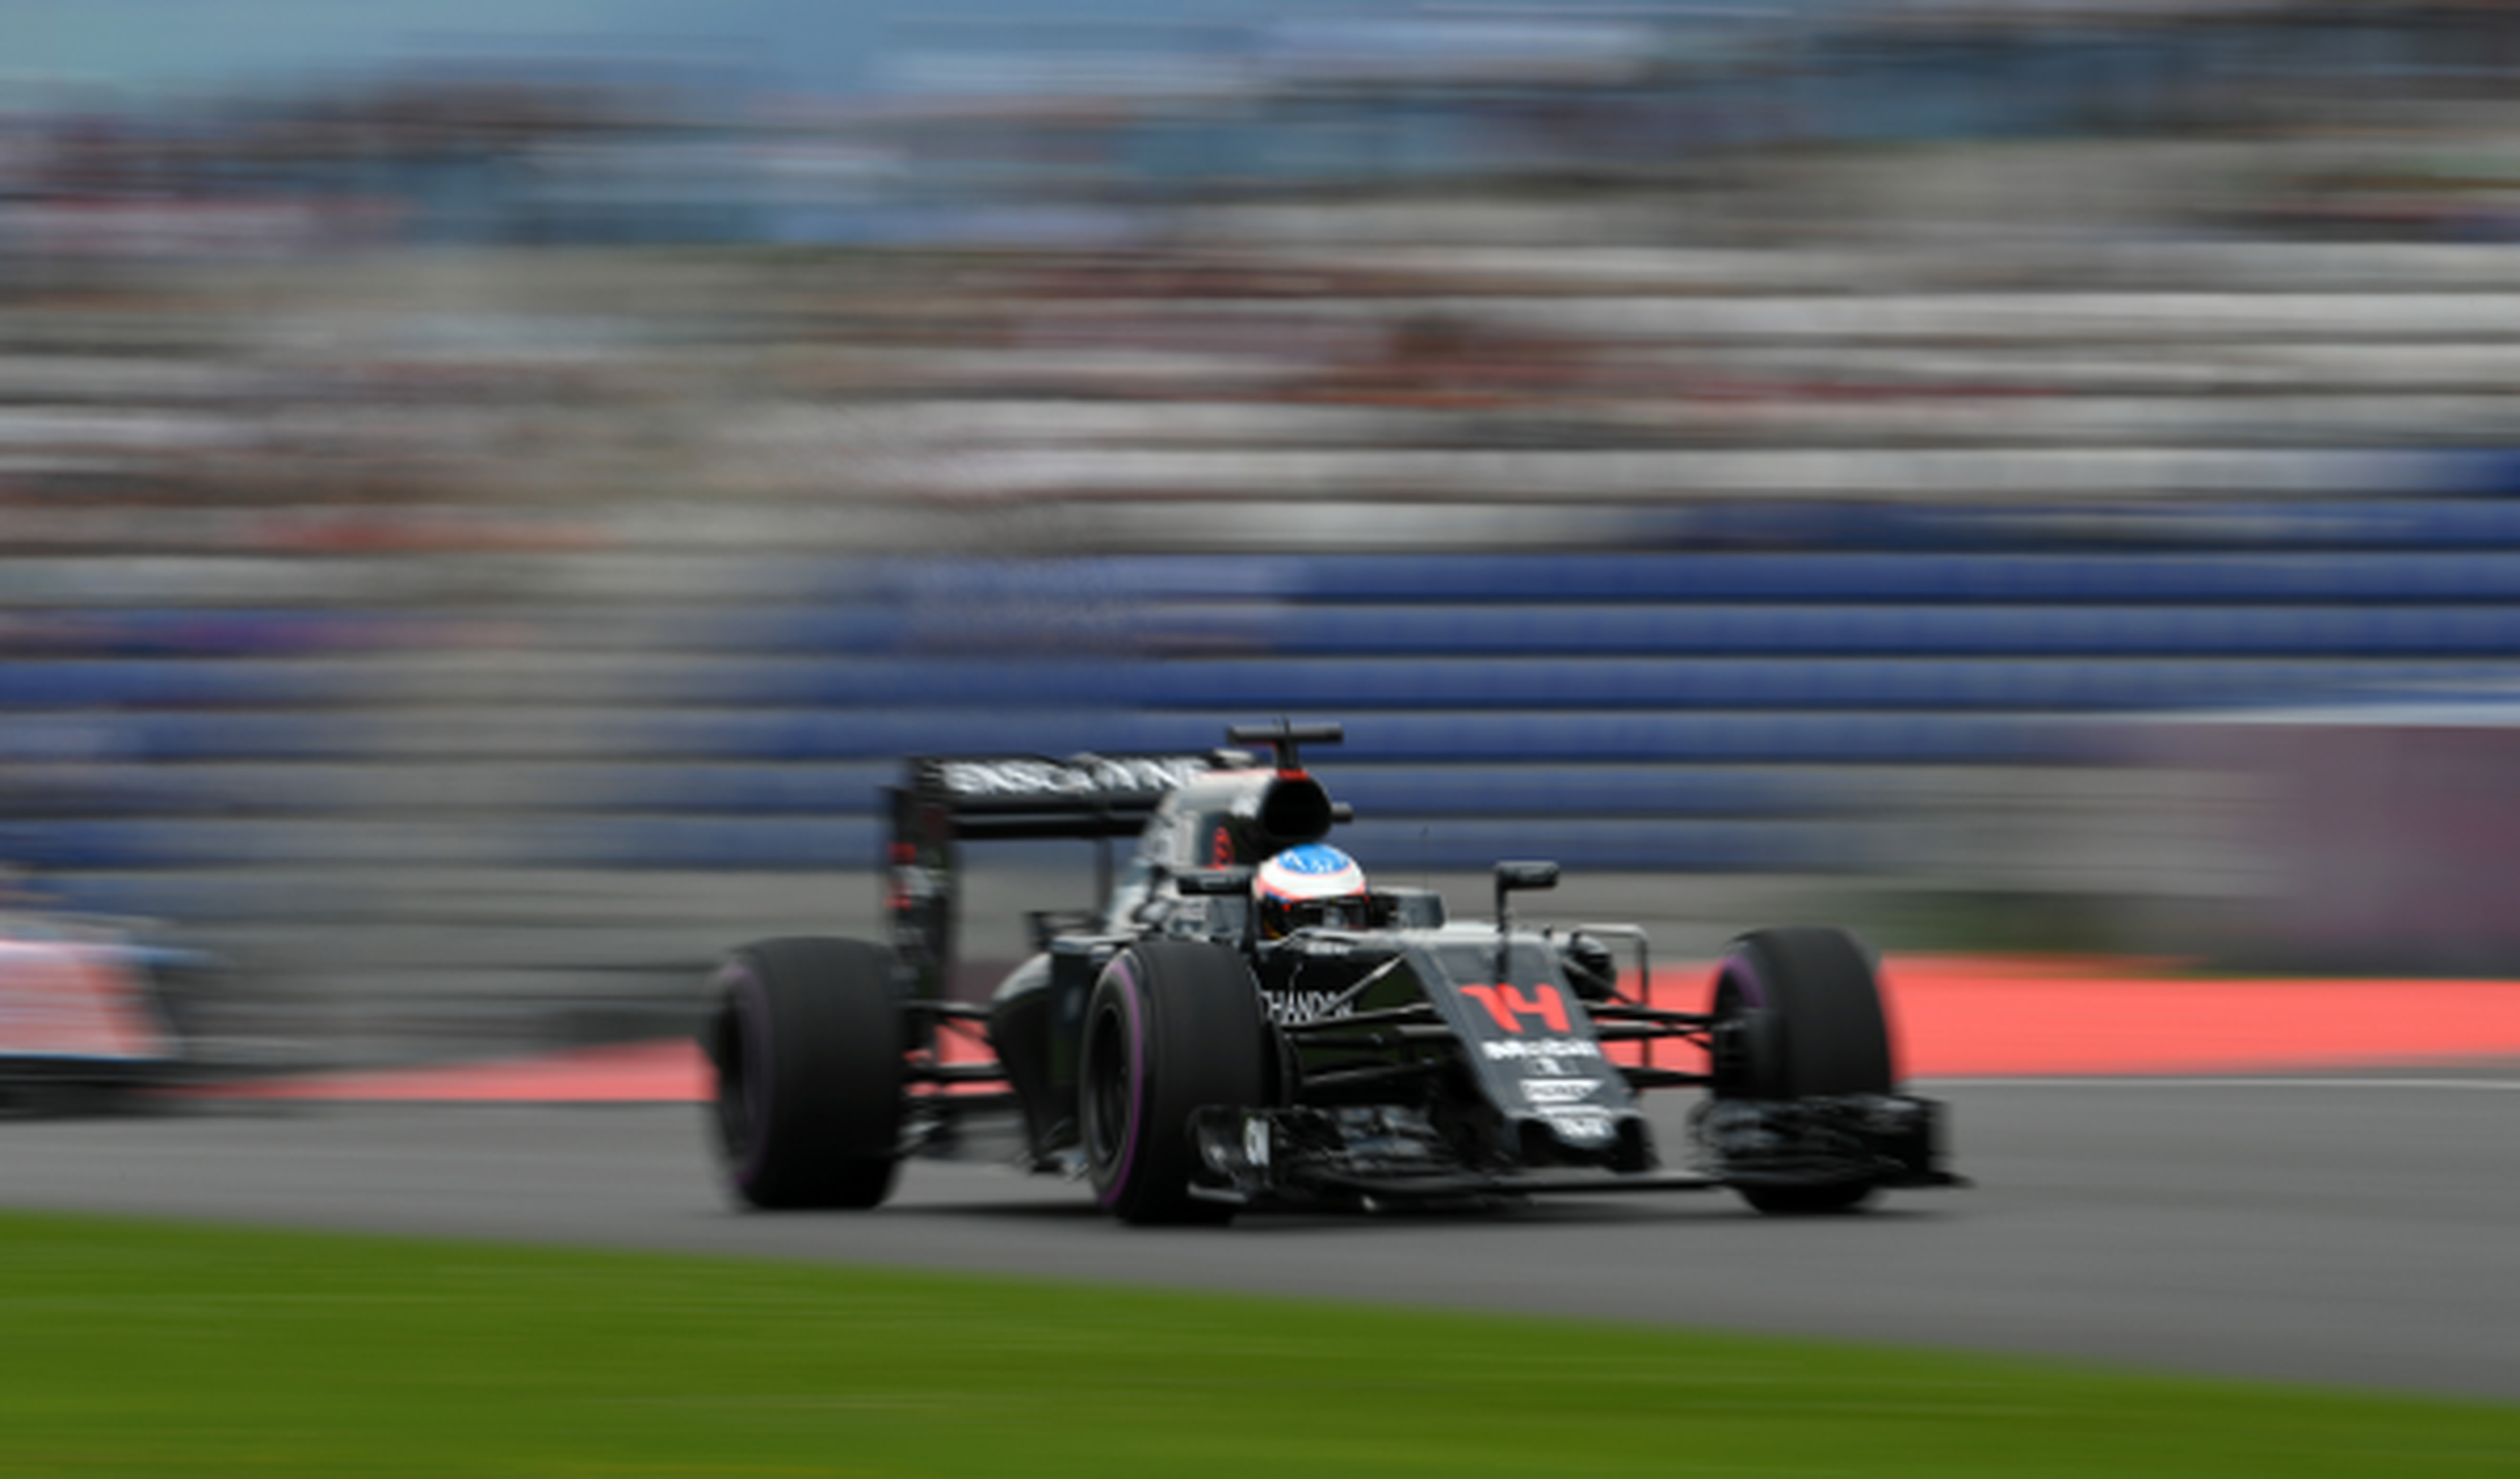 Cara y cruz para McLaren en Austria; Alonso, cruz